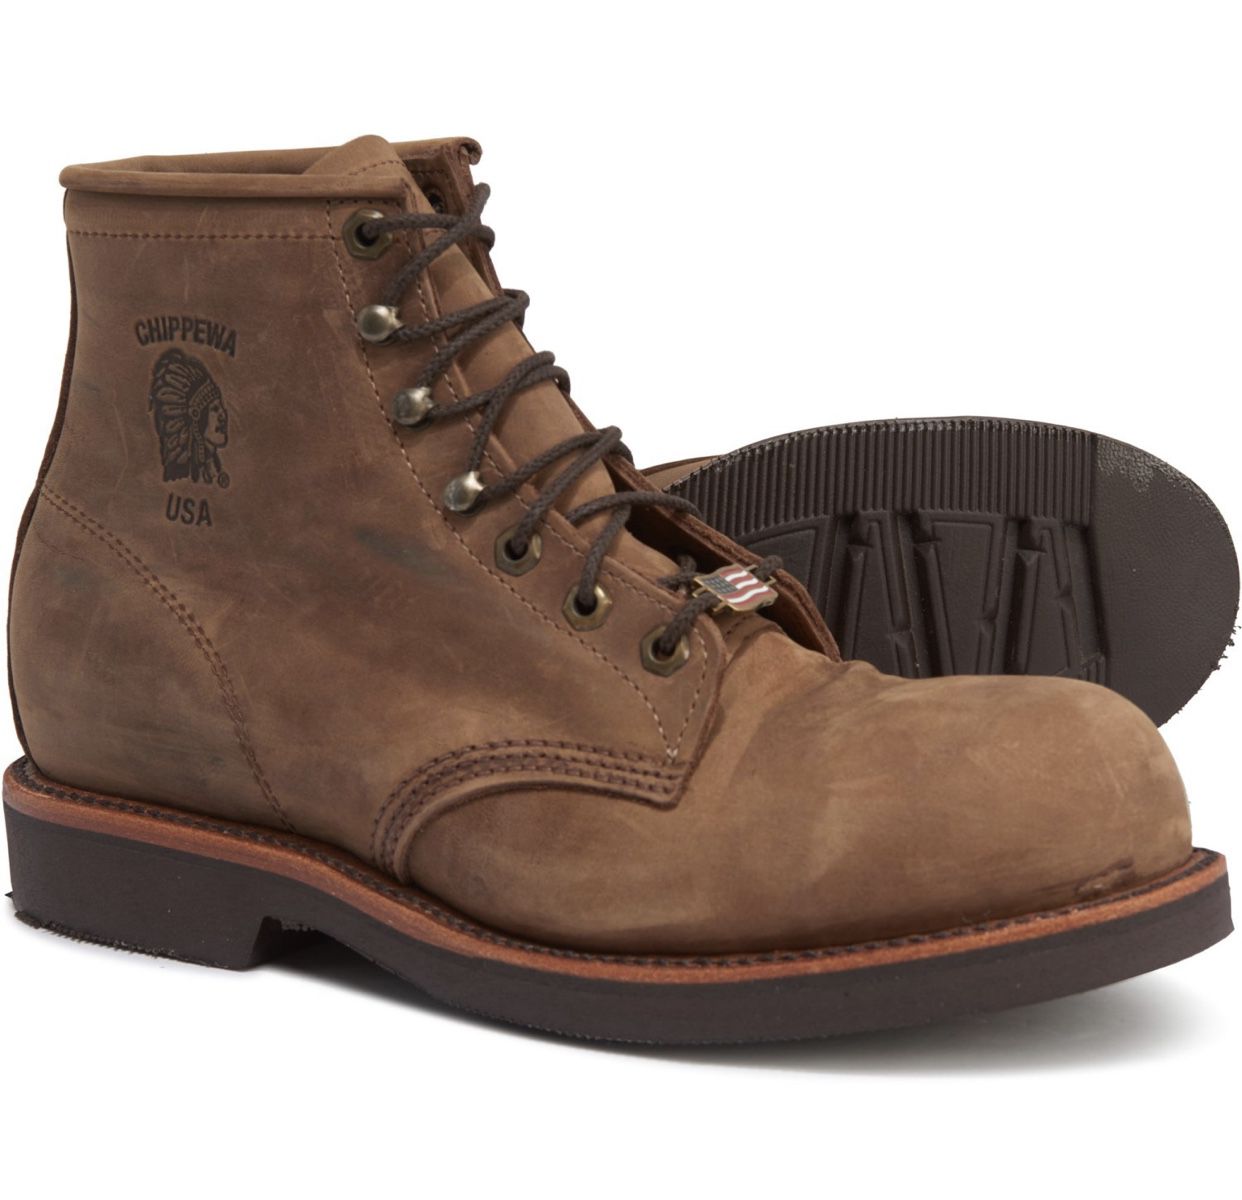 Chippewa Ellison 6” Leather Work Boots Chocolate